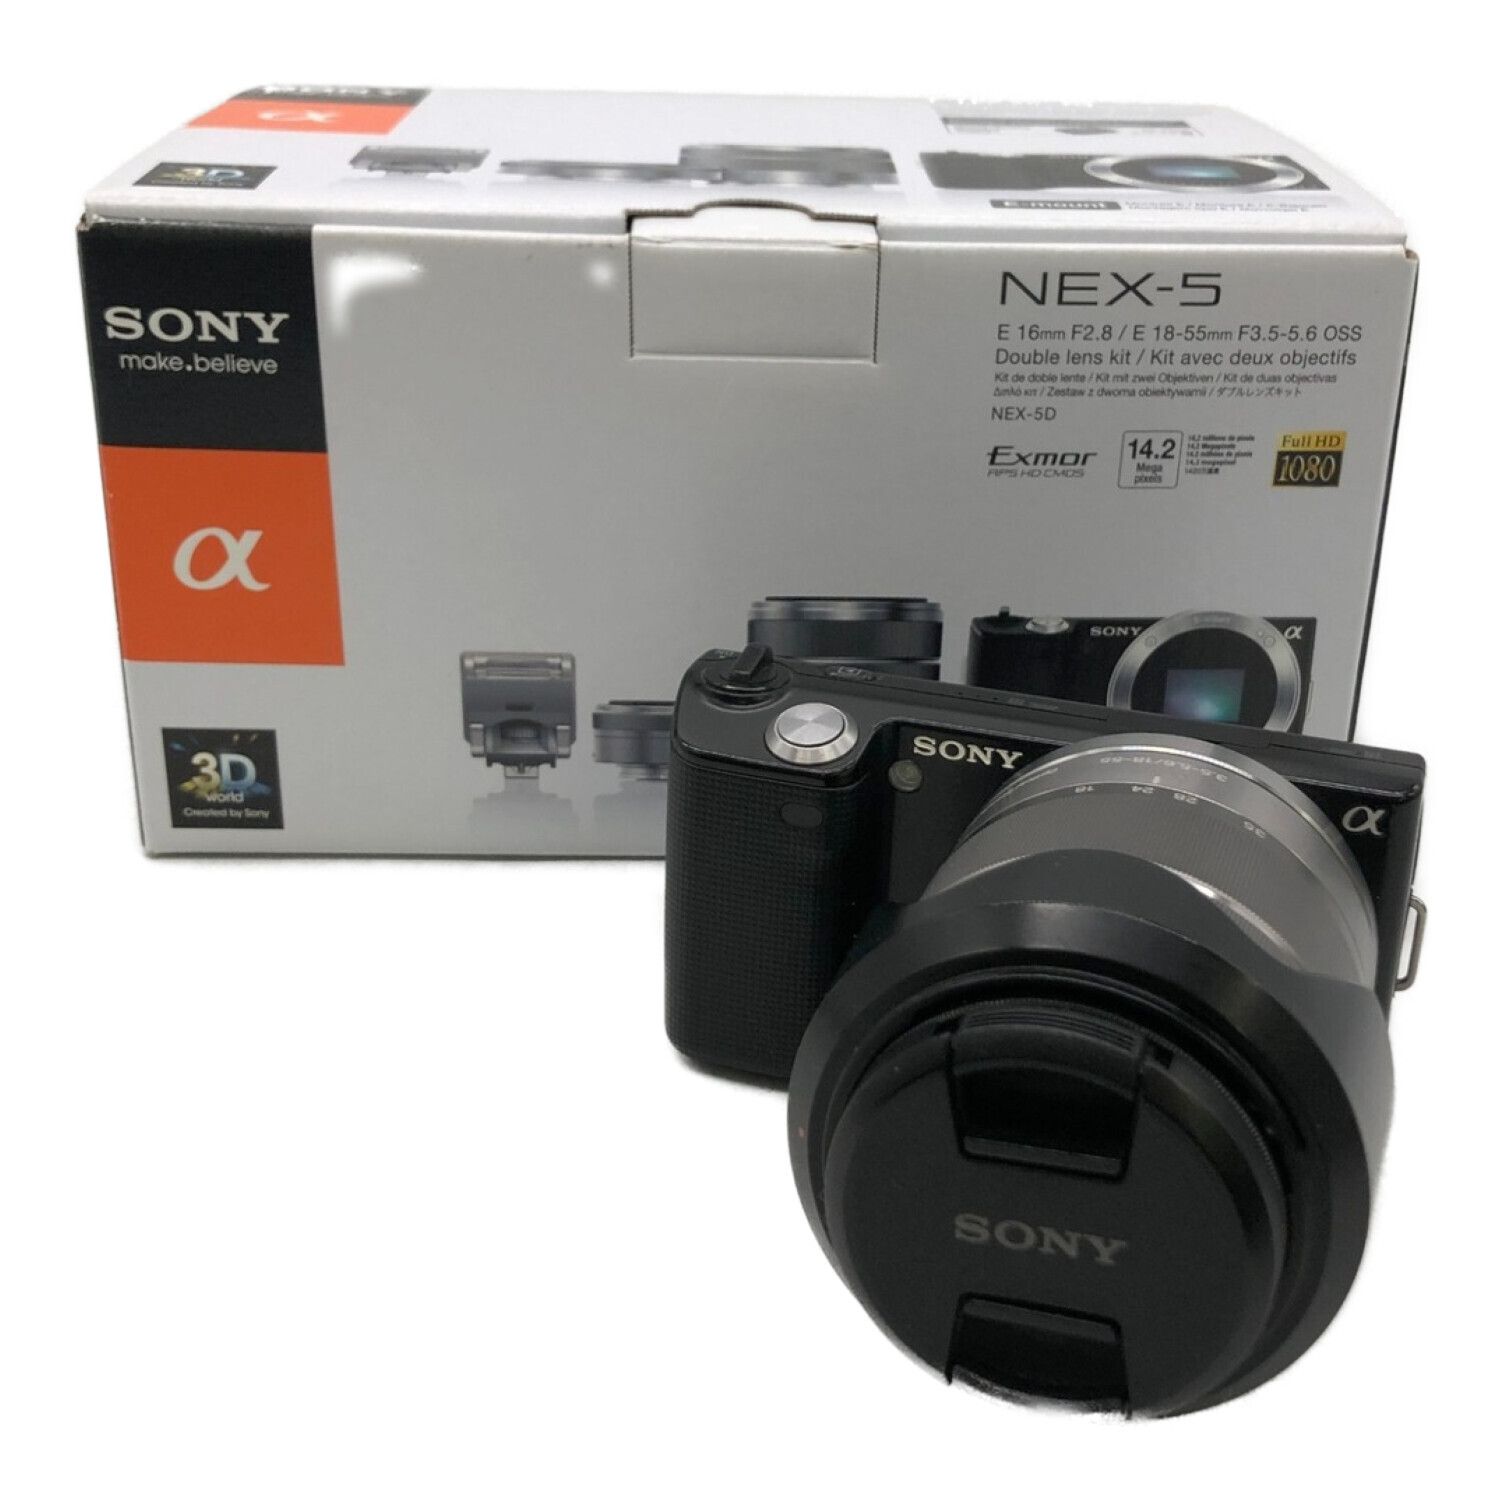 SONY (ソニー) デジタル一眼レフカメラ NEX-5D 1420万画素